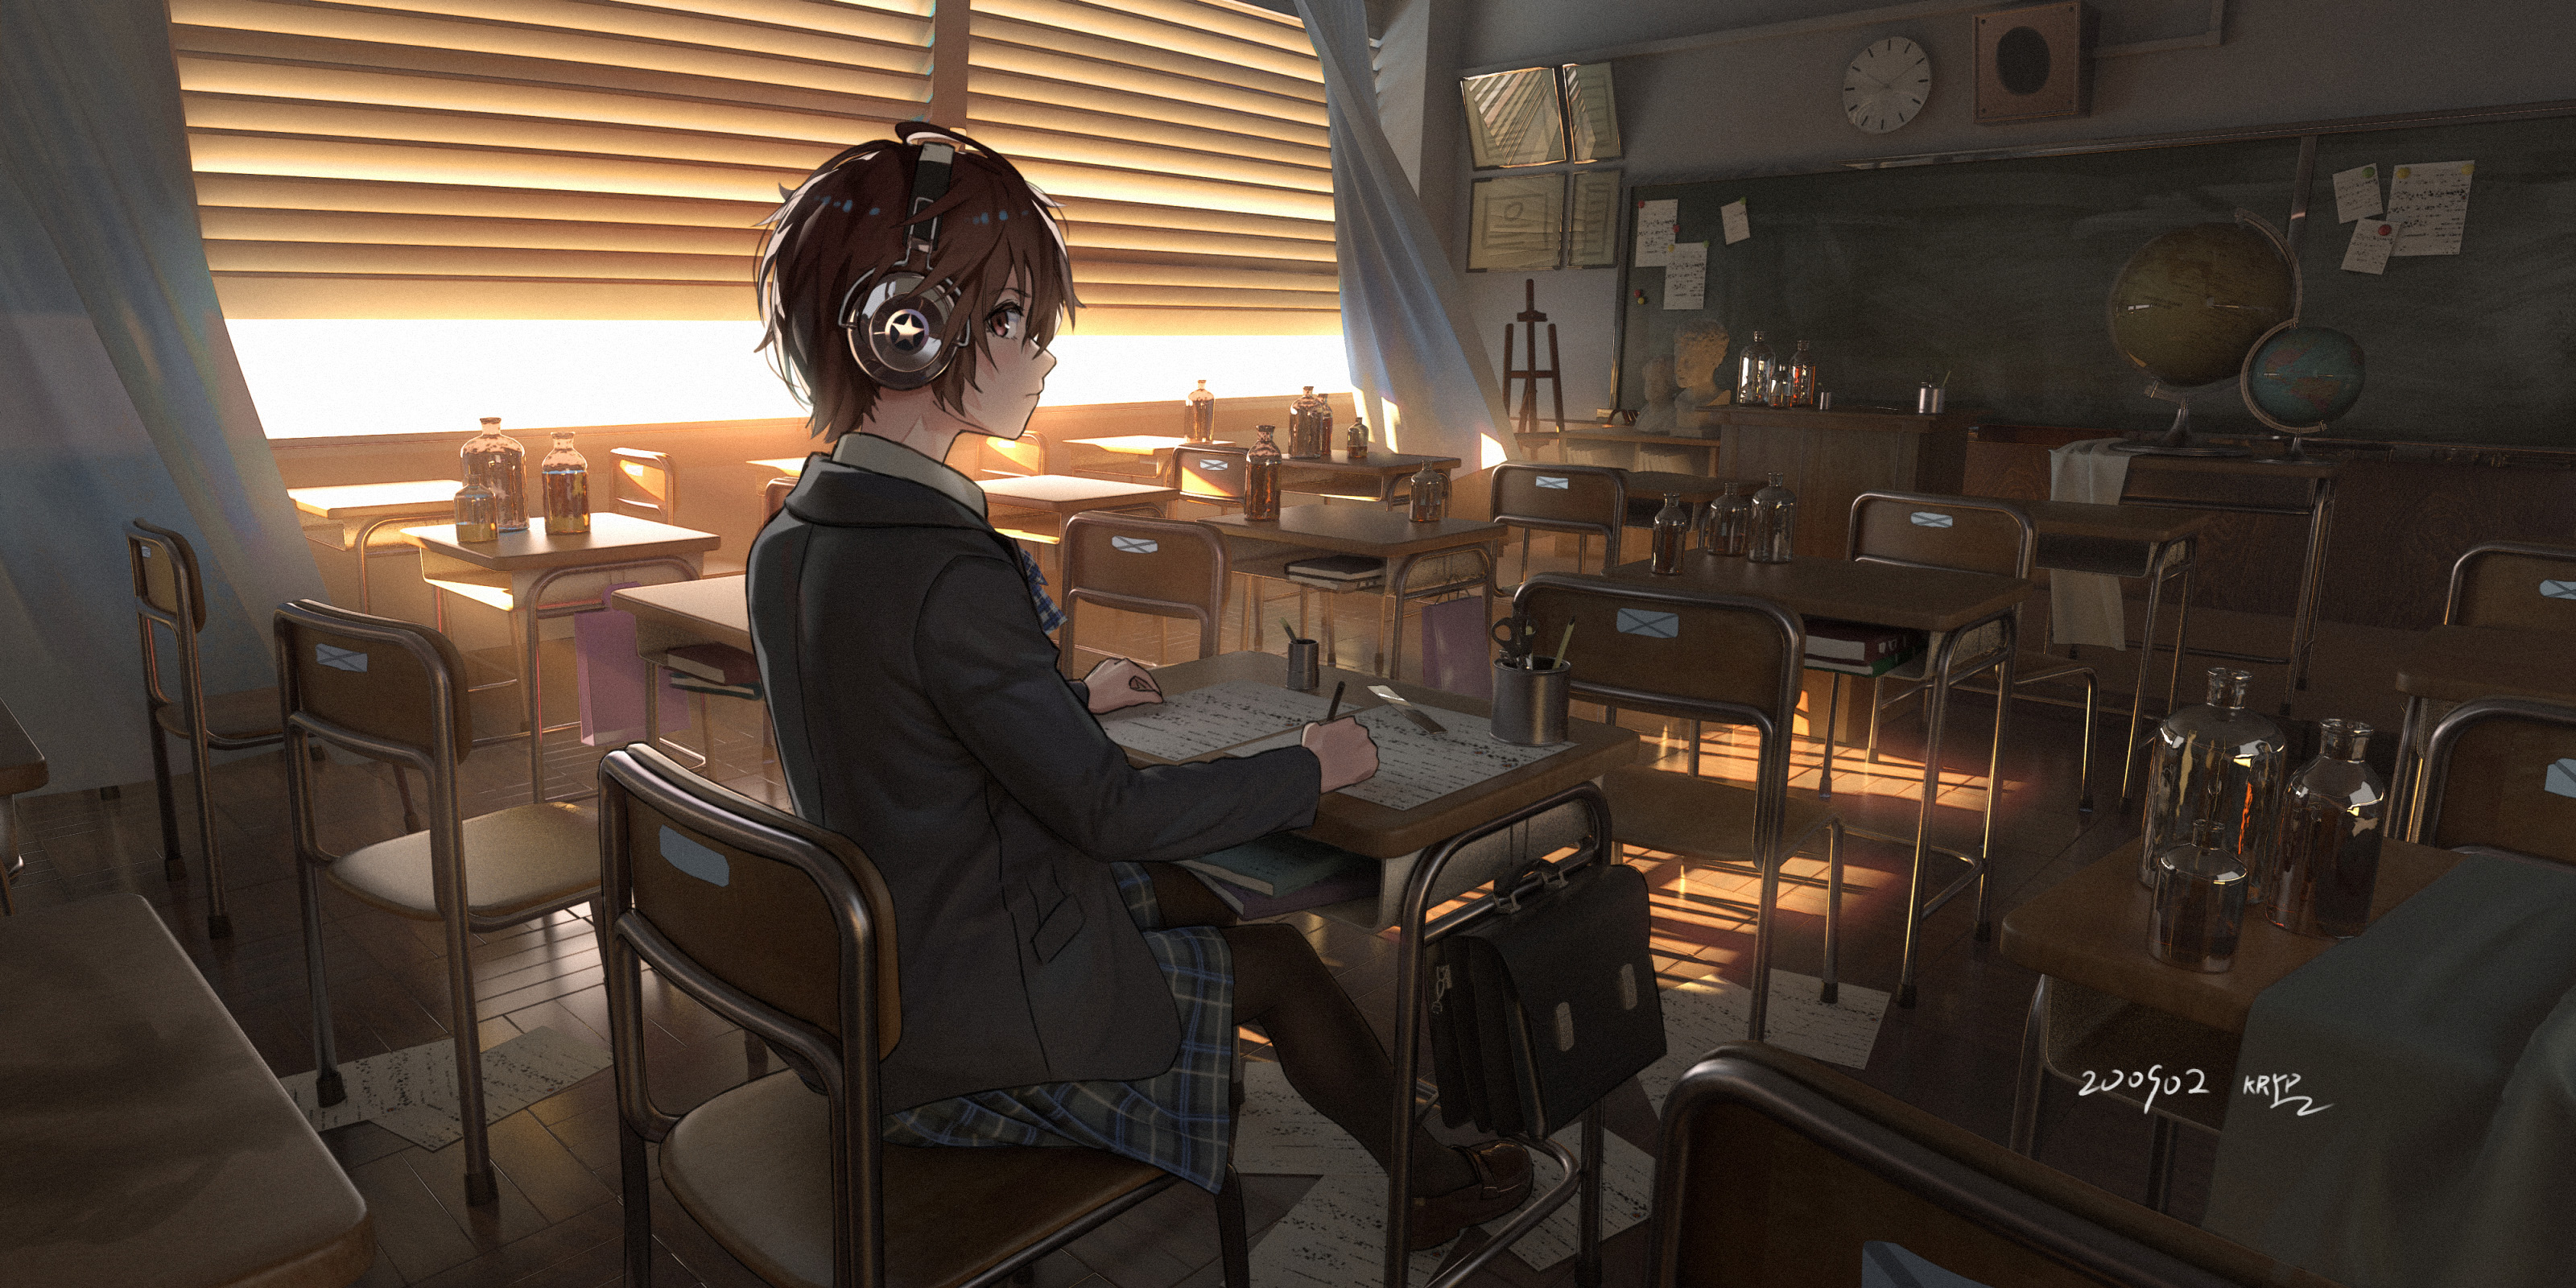 Anime Anime Girls Brunette School Uniform Headphones Classroom Brown Eyes Writing Kryp132 3200x1600